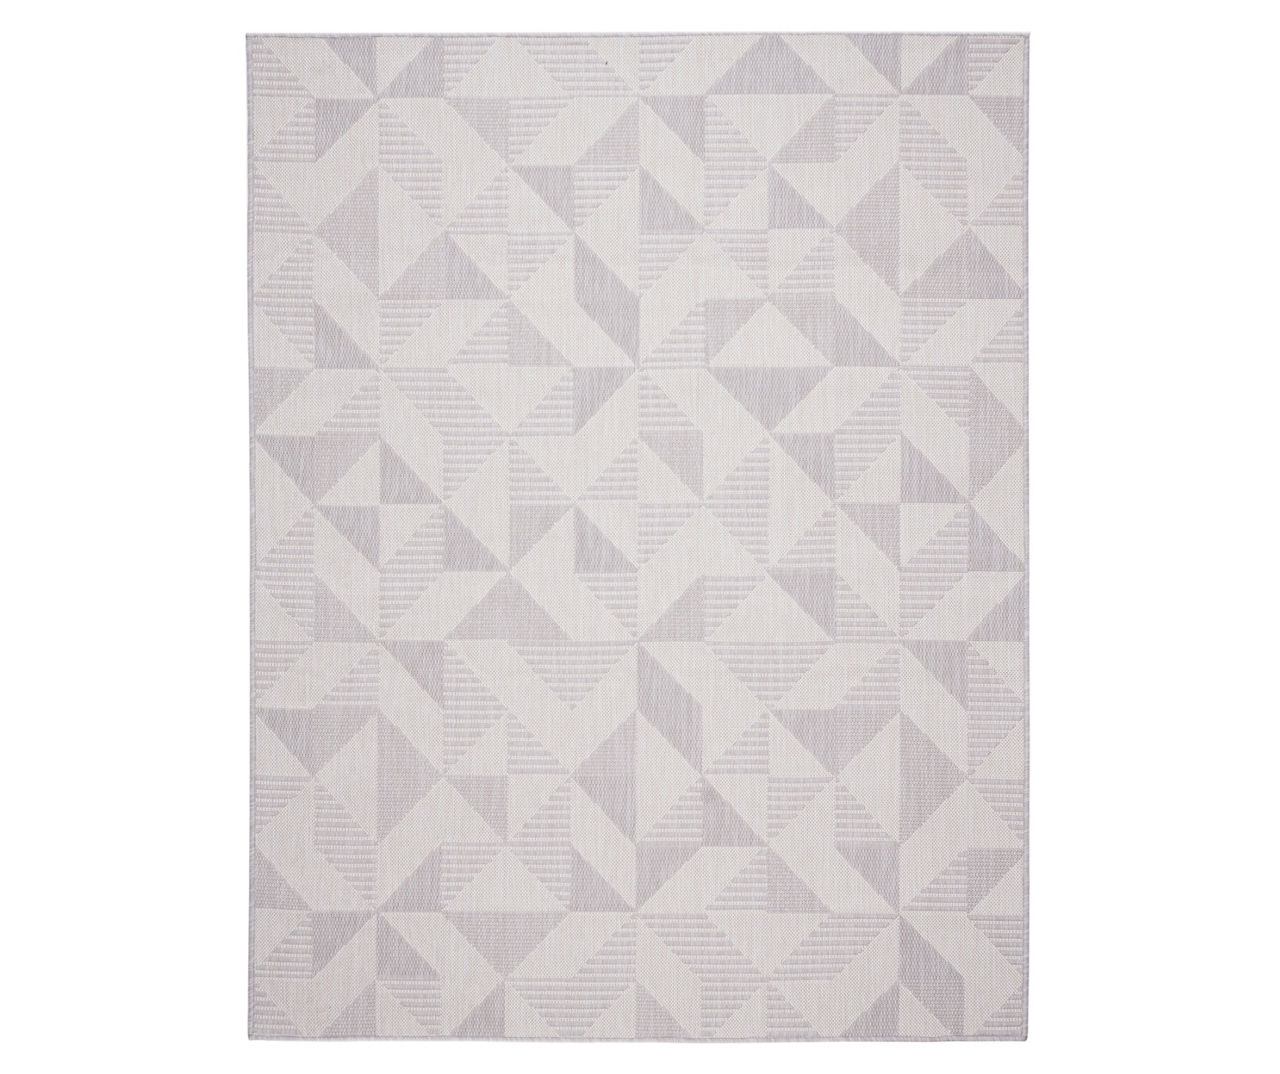 Pavero Gray & White Geometric Outdoor Area Rug, (8' x 10')